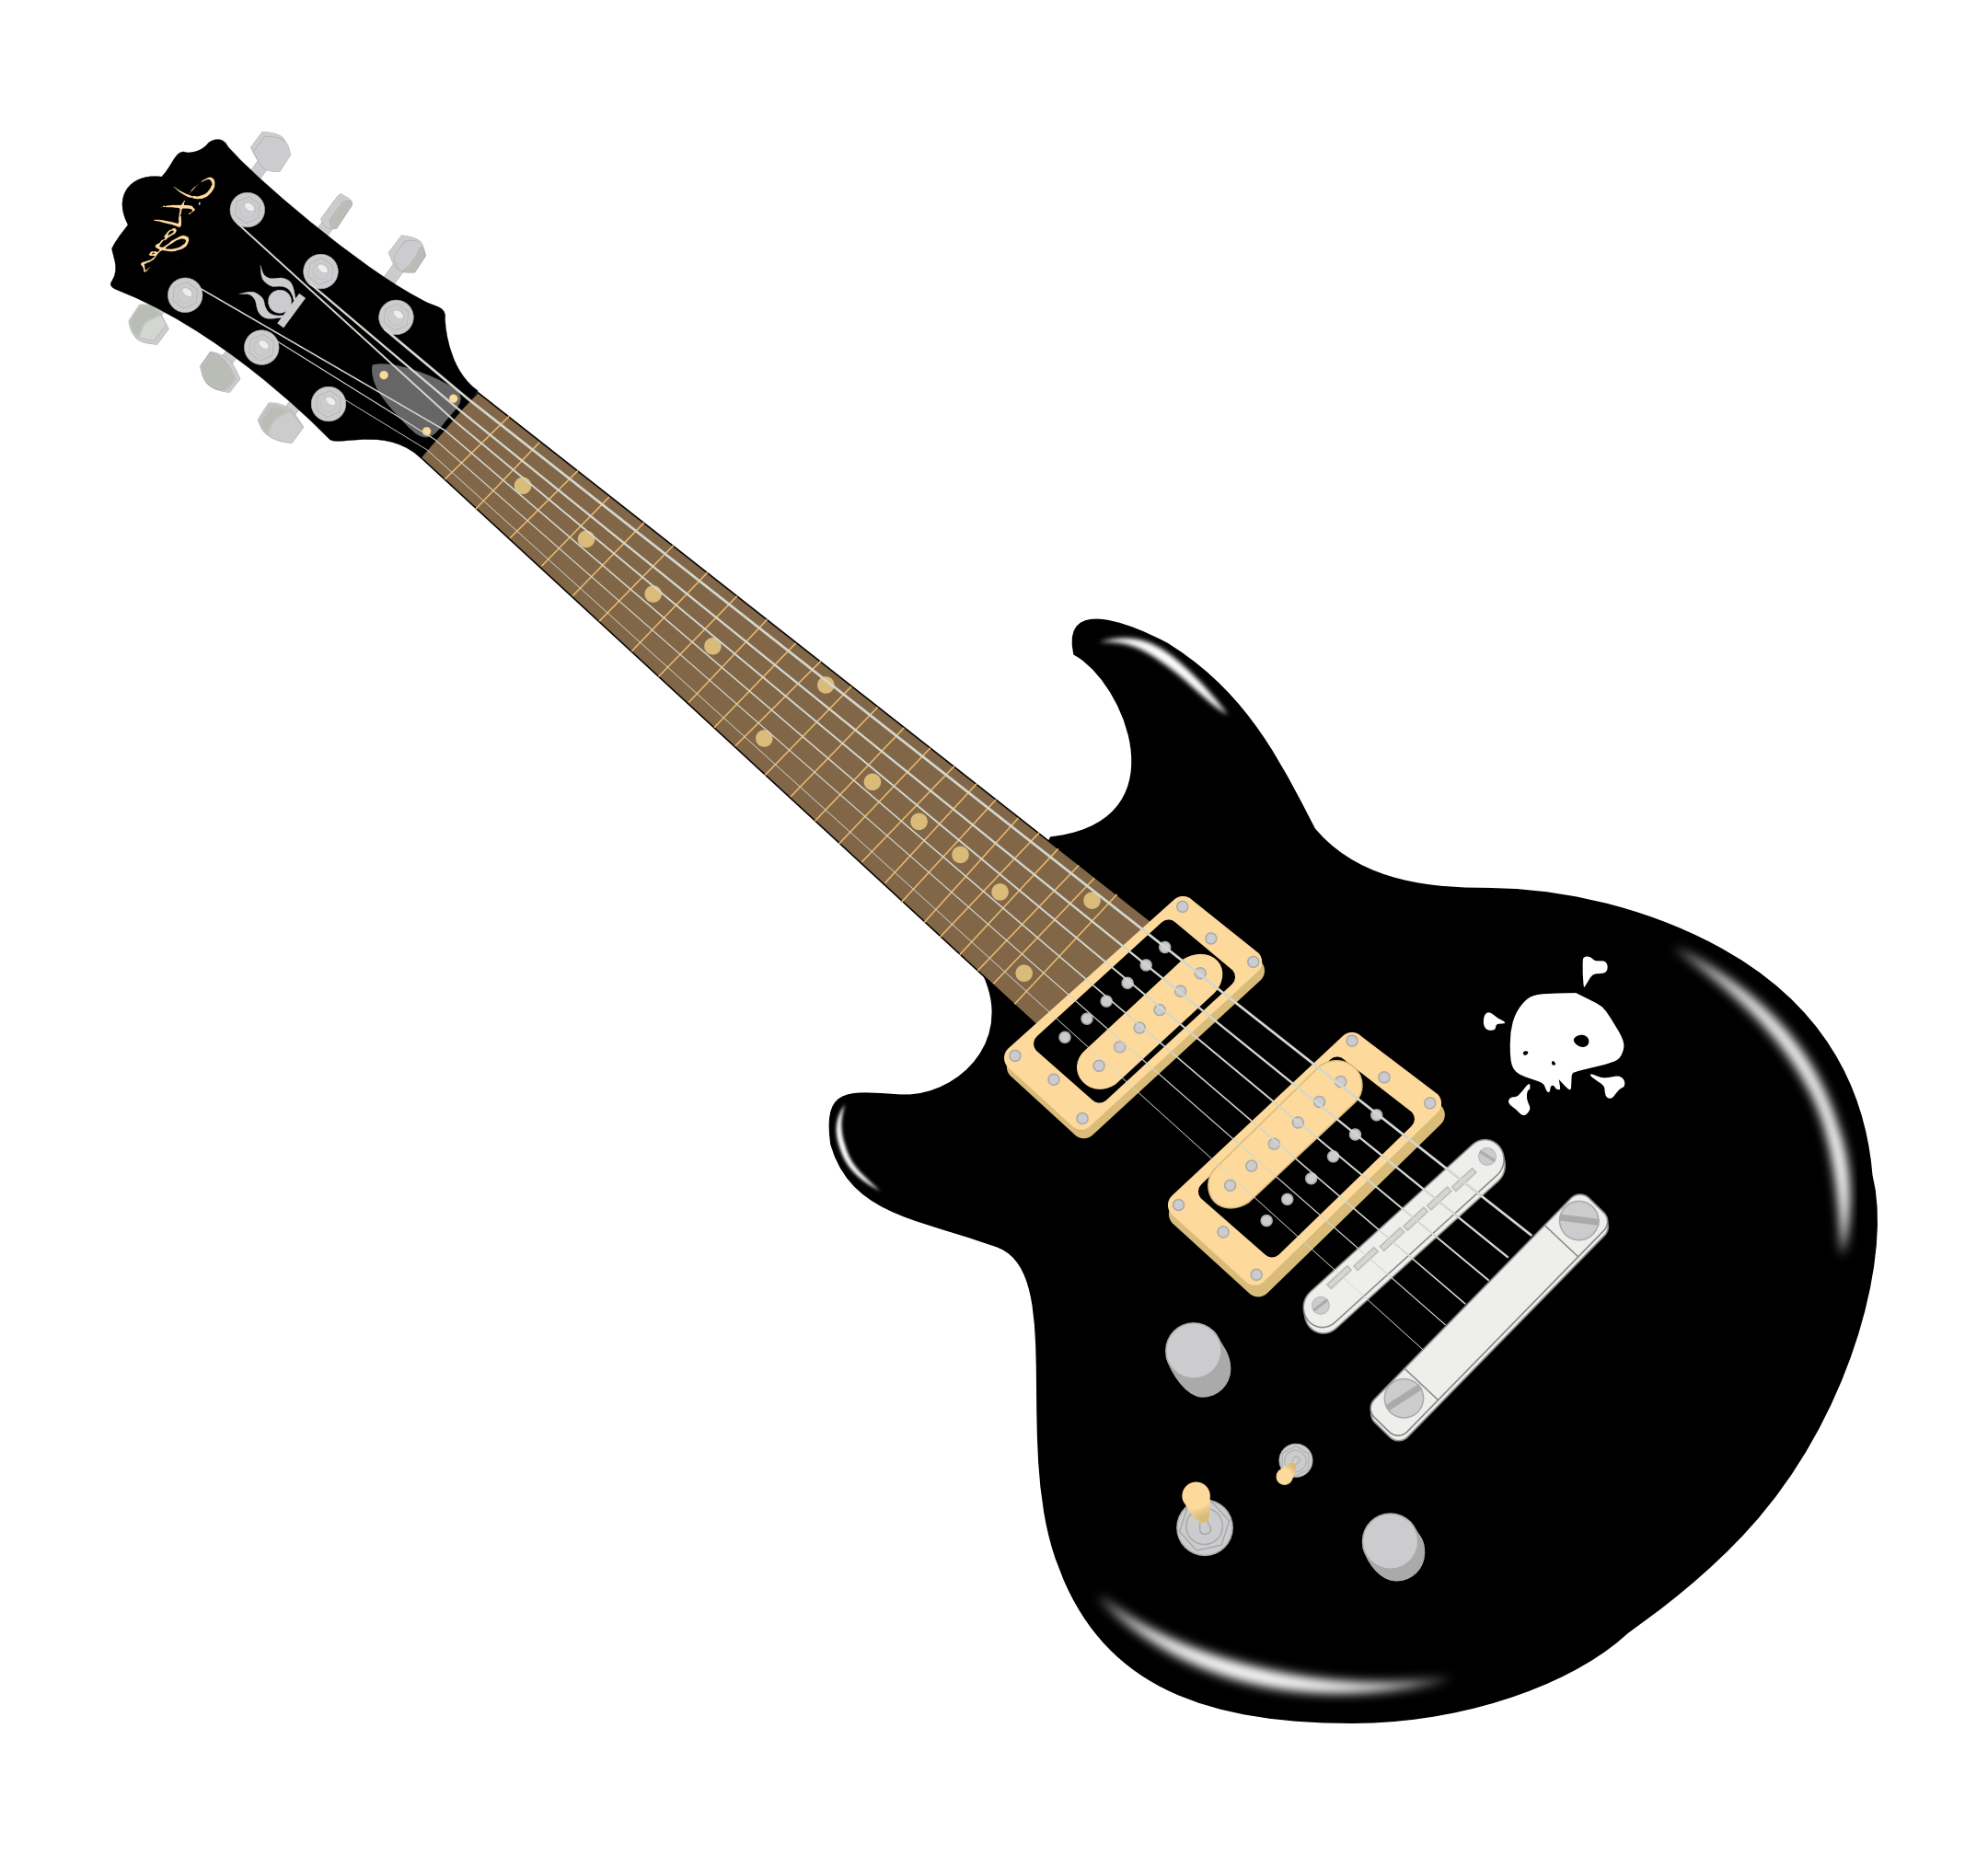 Guitar Png Image - Guitar, Transparent background PNG HD thumbnail